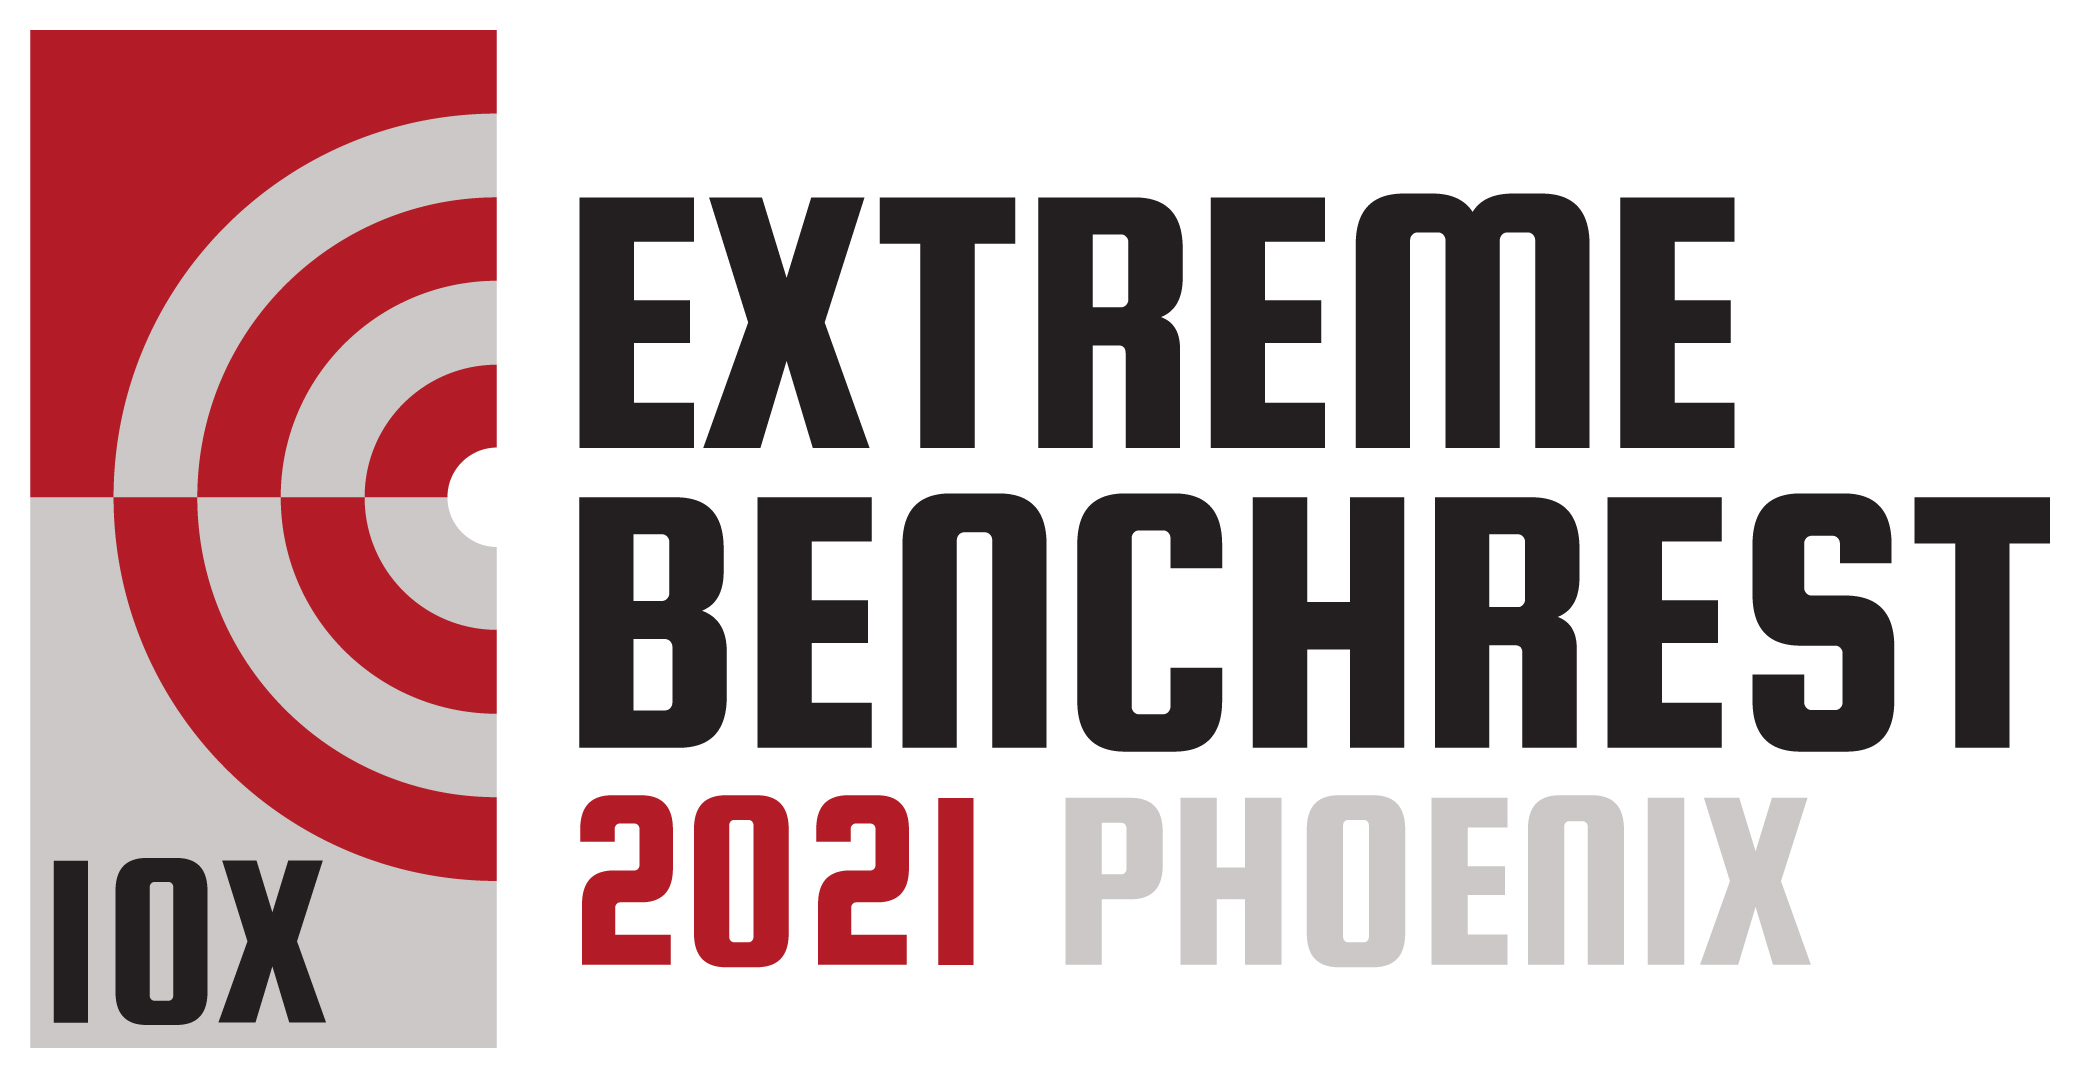 ebr-full-logo-PRINT-Phoenix2021.1633110353.jpg